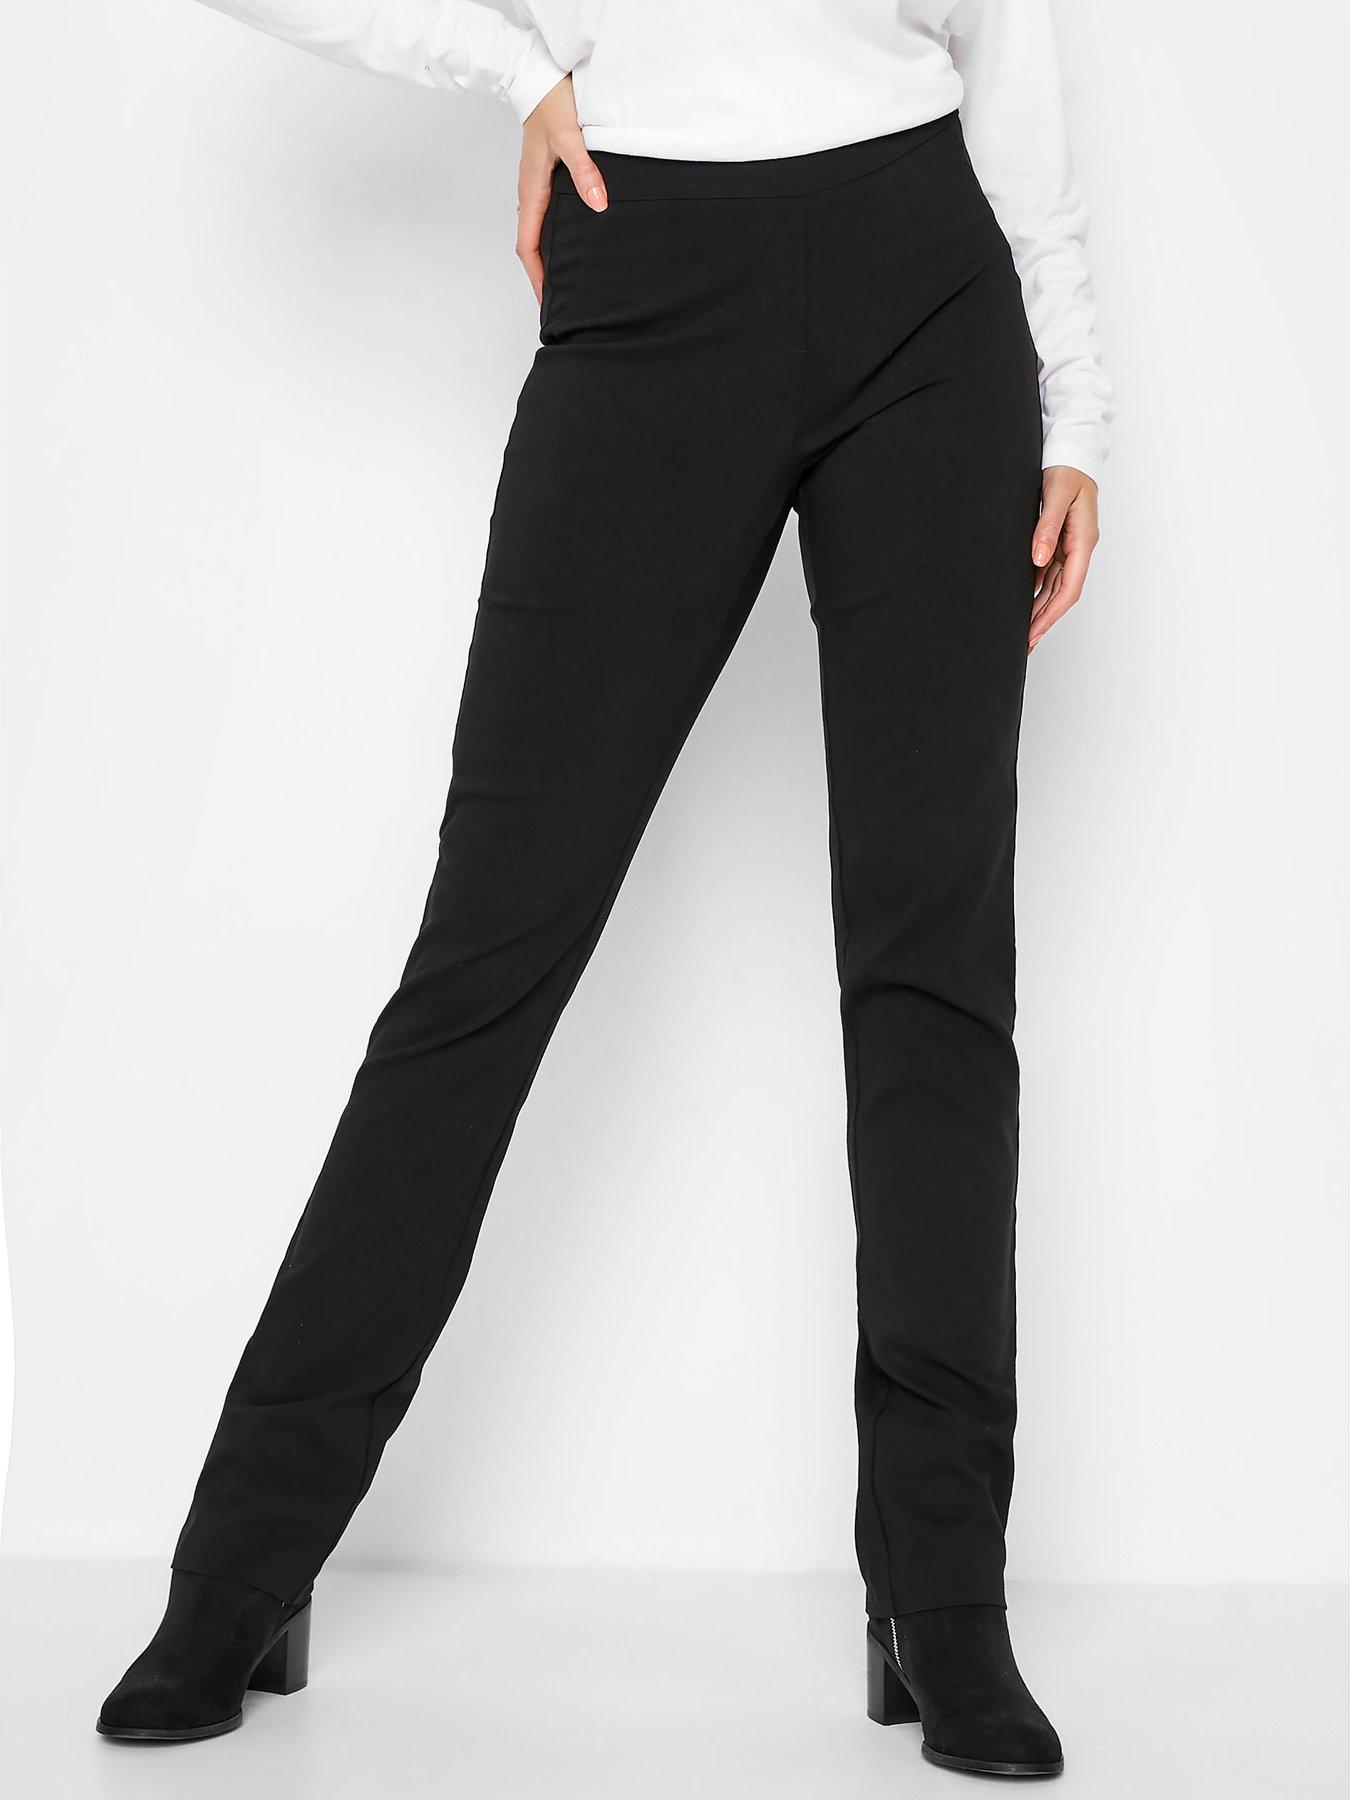 long tall sally, Pants & Jumpsuits, Lot Of 2 Pairs Long Tall Sally  Leggings Womens Black 8 Long Classic Jersey